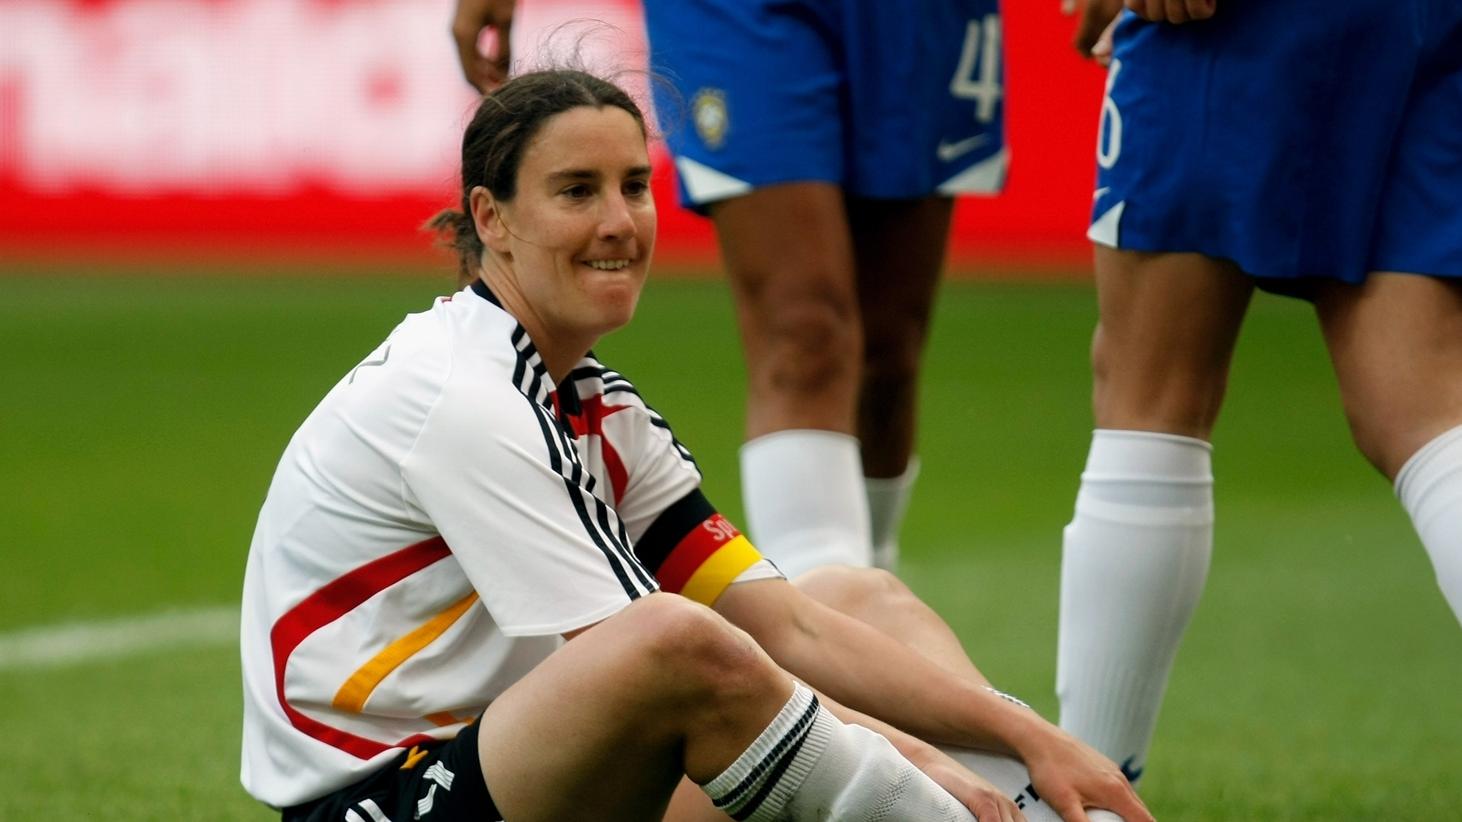 Prinz injury hits Frankfurt hopes | UEFA Women's Champions League | UEFA.com